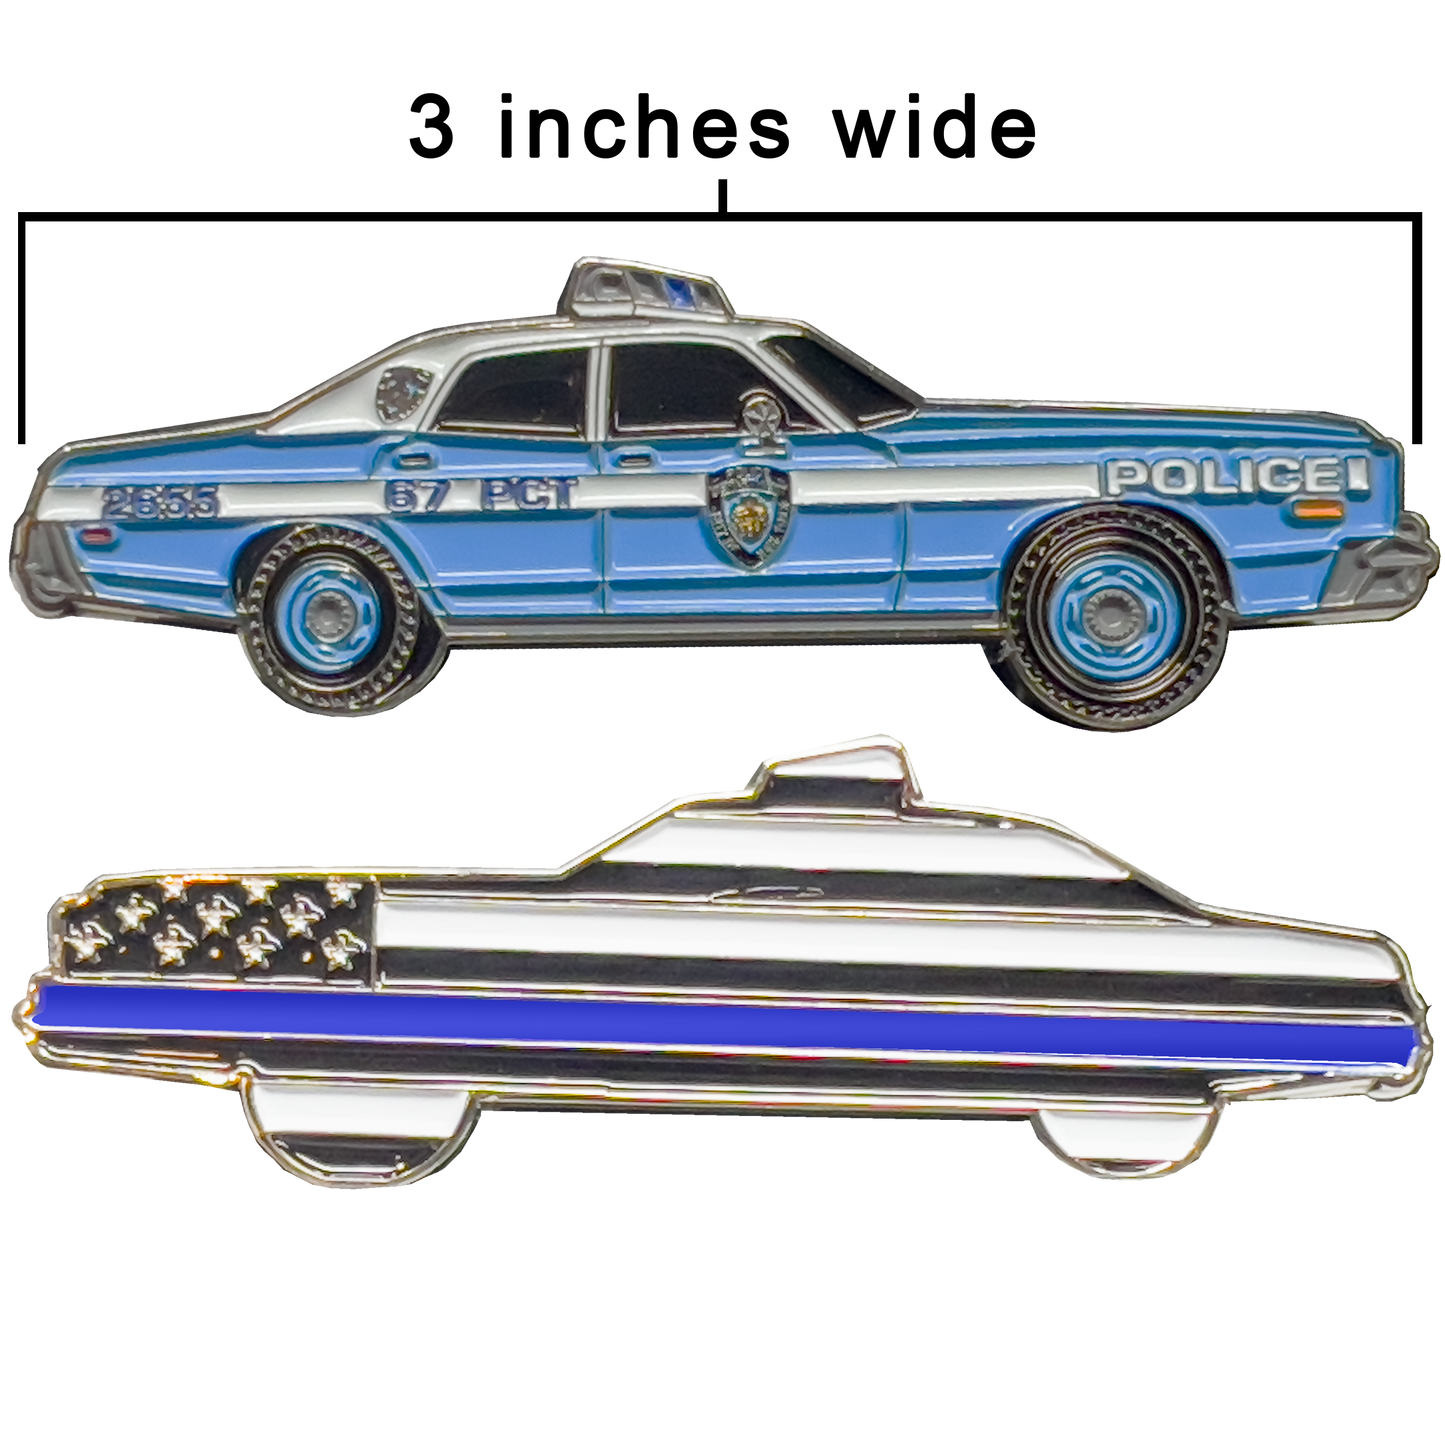 GL7-002 NYPD Vintage Police Car Challenge Coin New York City Police Officer Serpico Kojak era